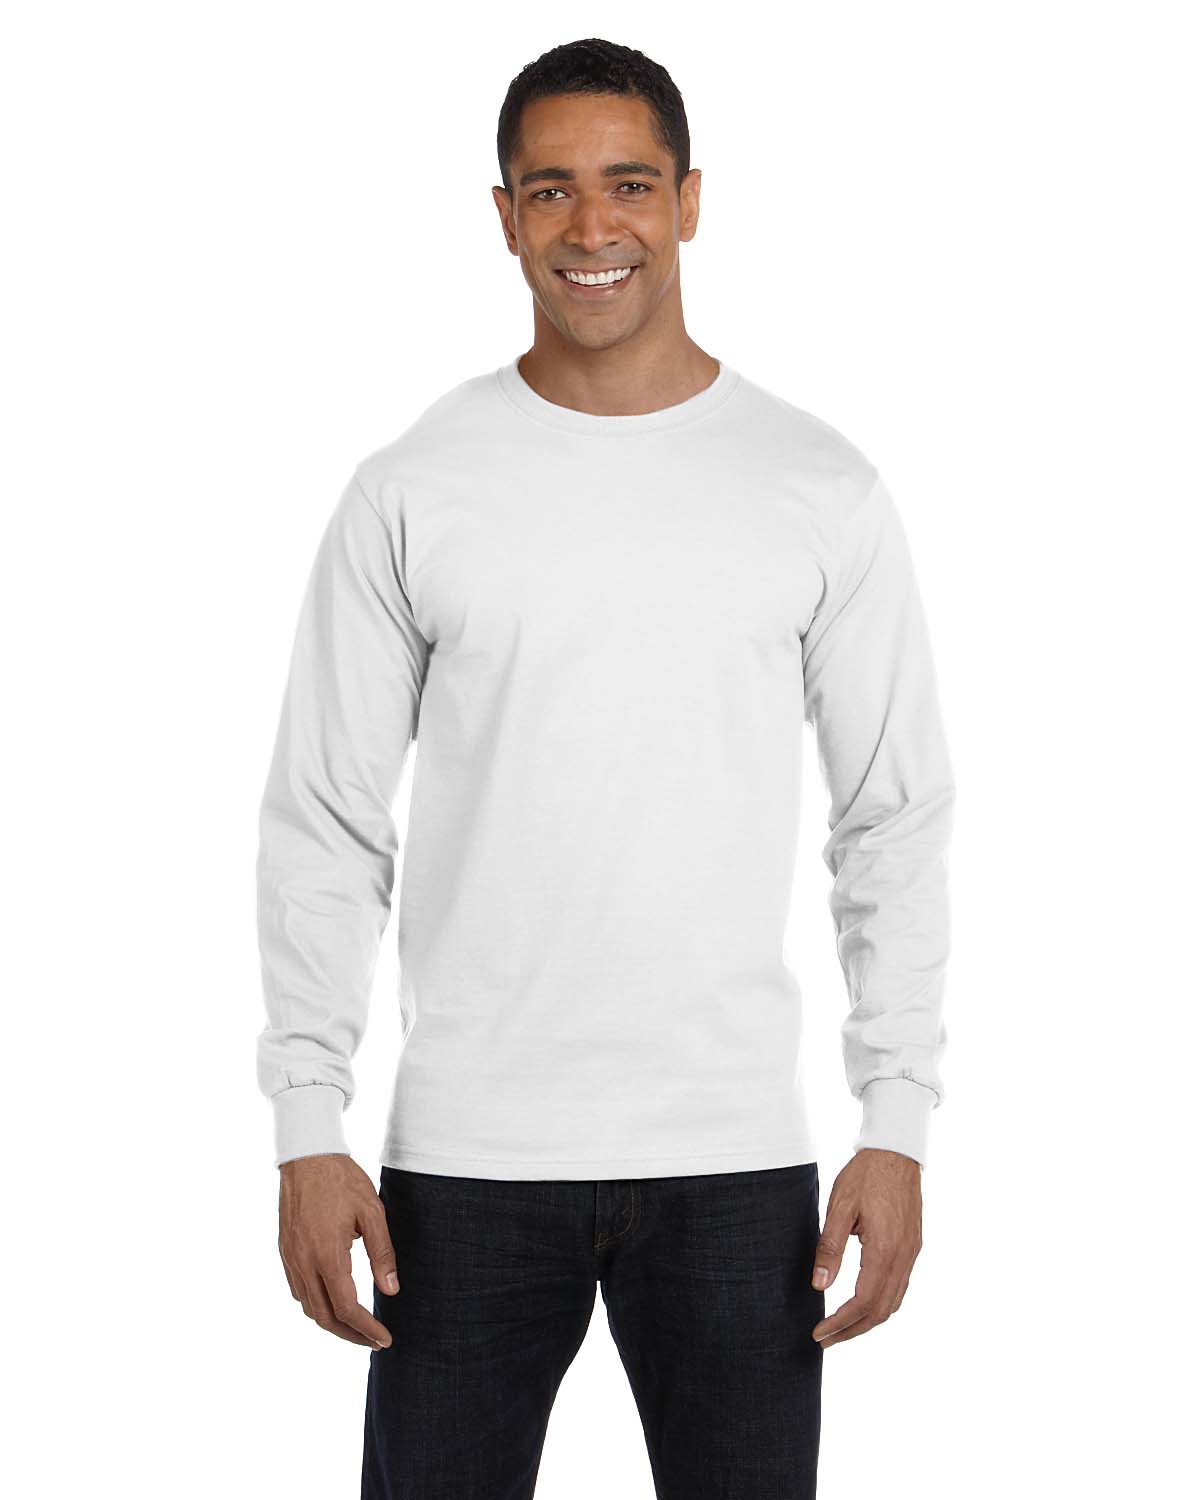 'Gildan G840 Adult Long Sleeve Cotton Polyester T-Shirt'